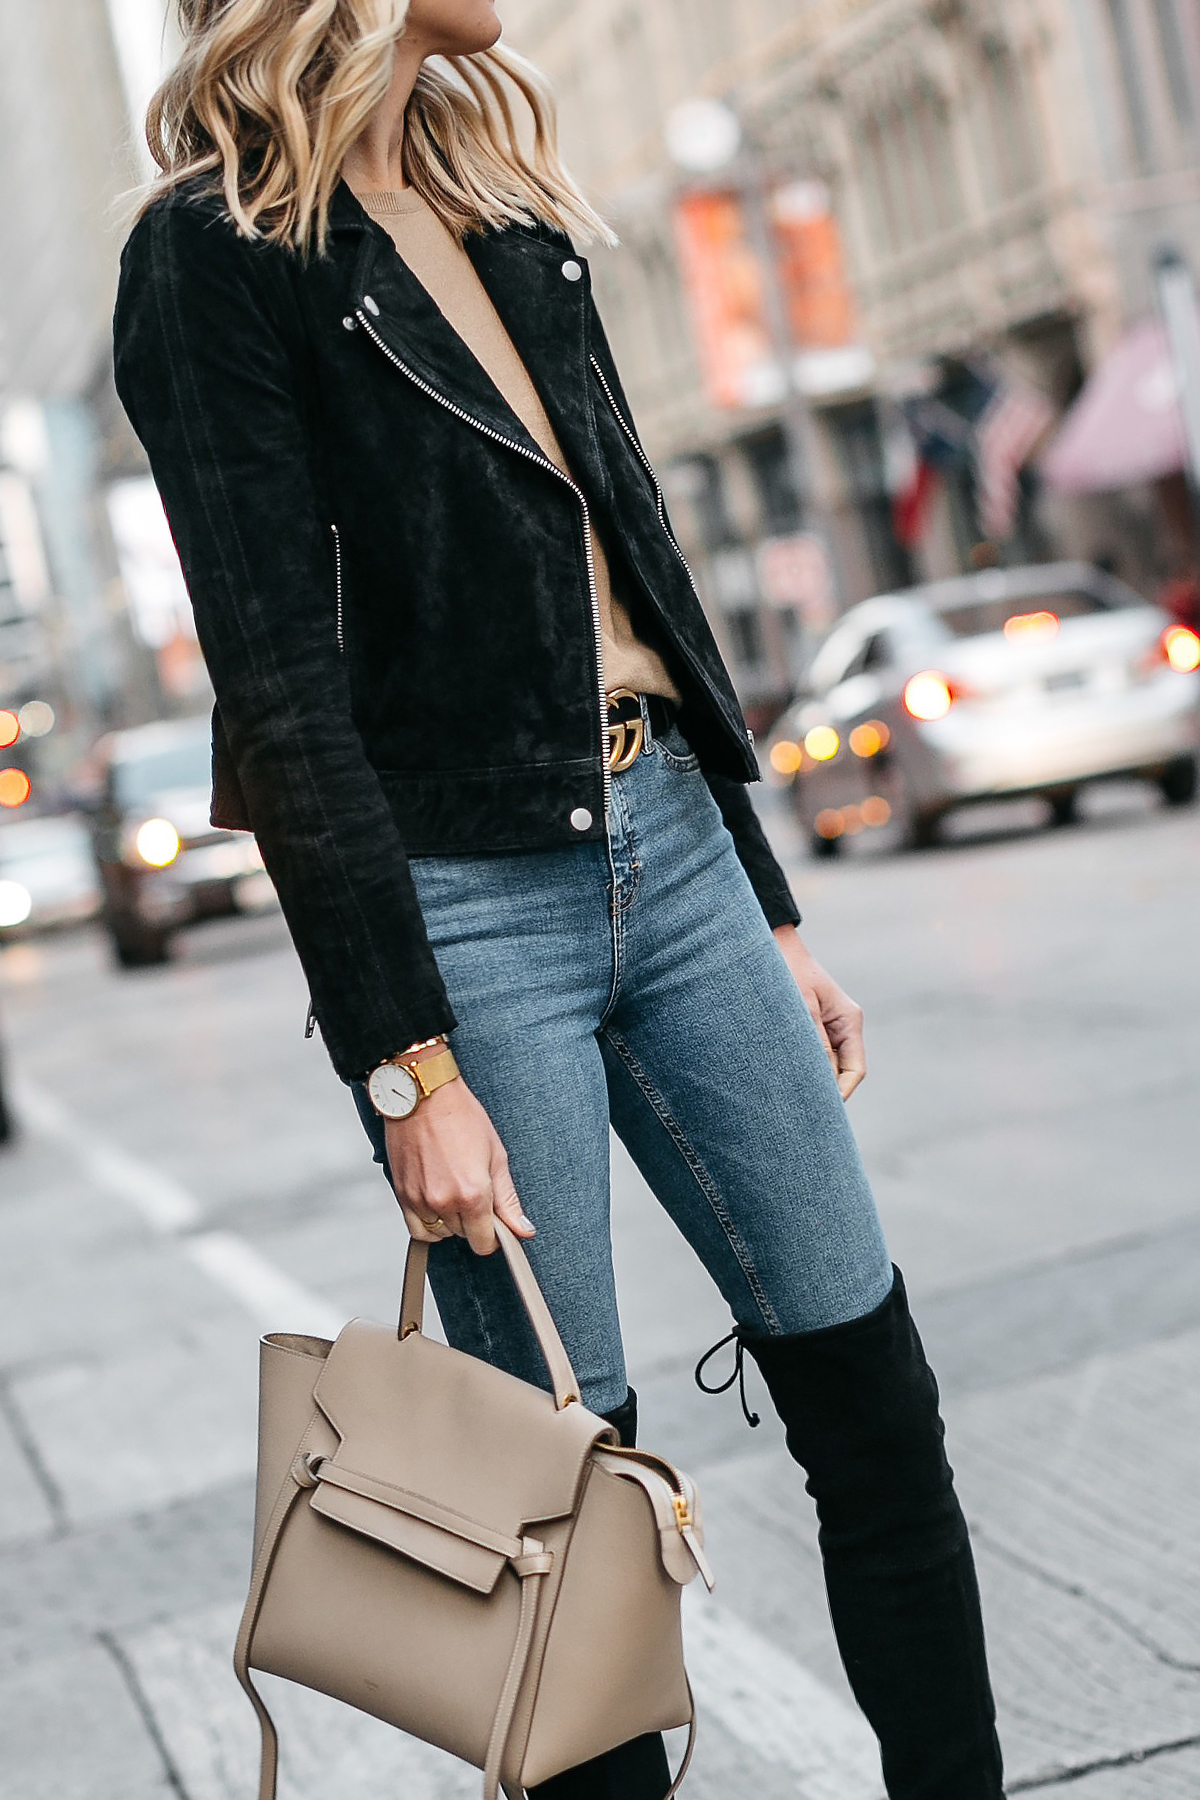 Black Suede Moto Jacket Camel Sweater Denim Skinny Jeans Stuart Weitzman Over-the-Knee boots Celine Mini Belt Bag Fashion Jackson Dallas Blogger Fashion Blogger Street Style